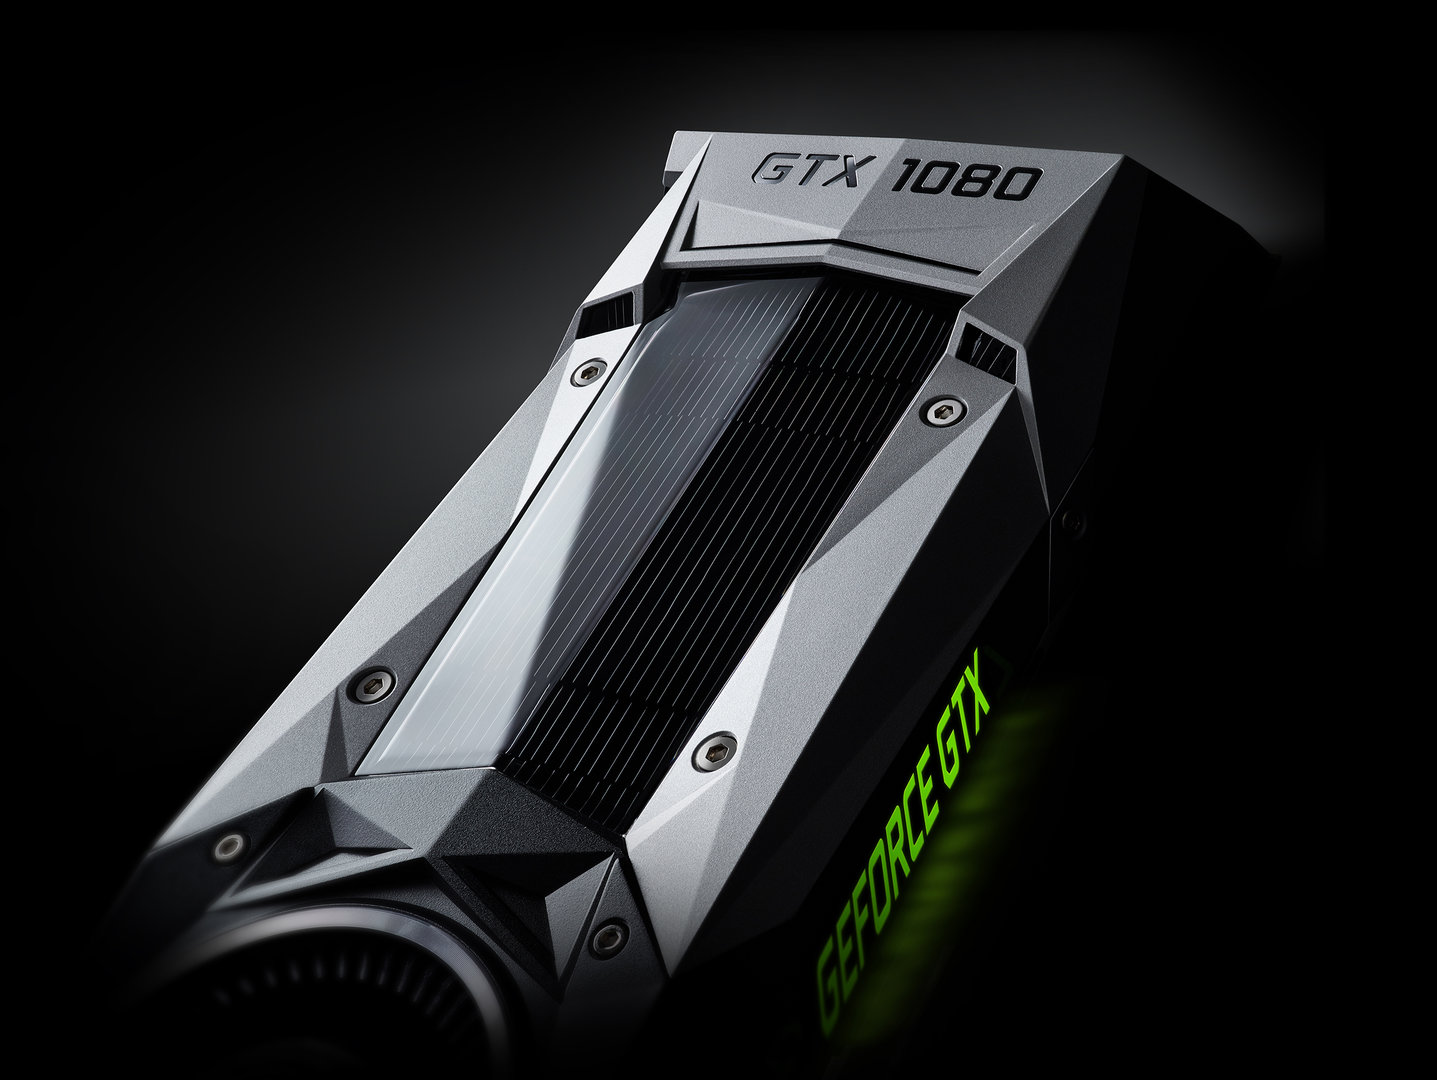 Nvidia GeForce GTX 1080 in Bildern